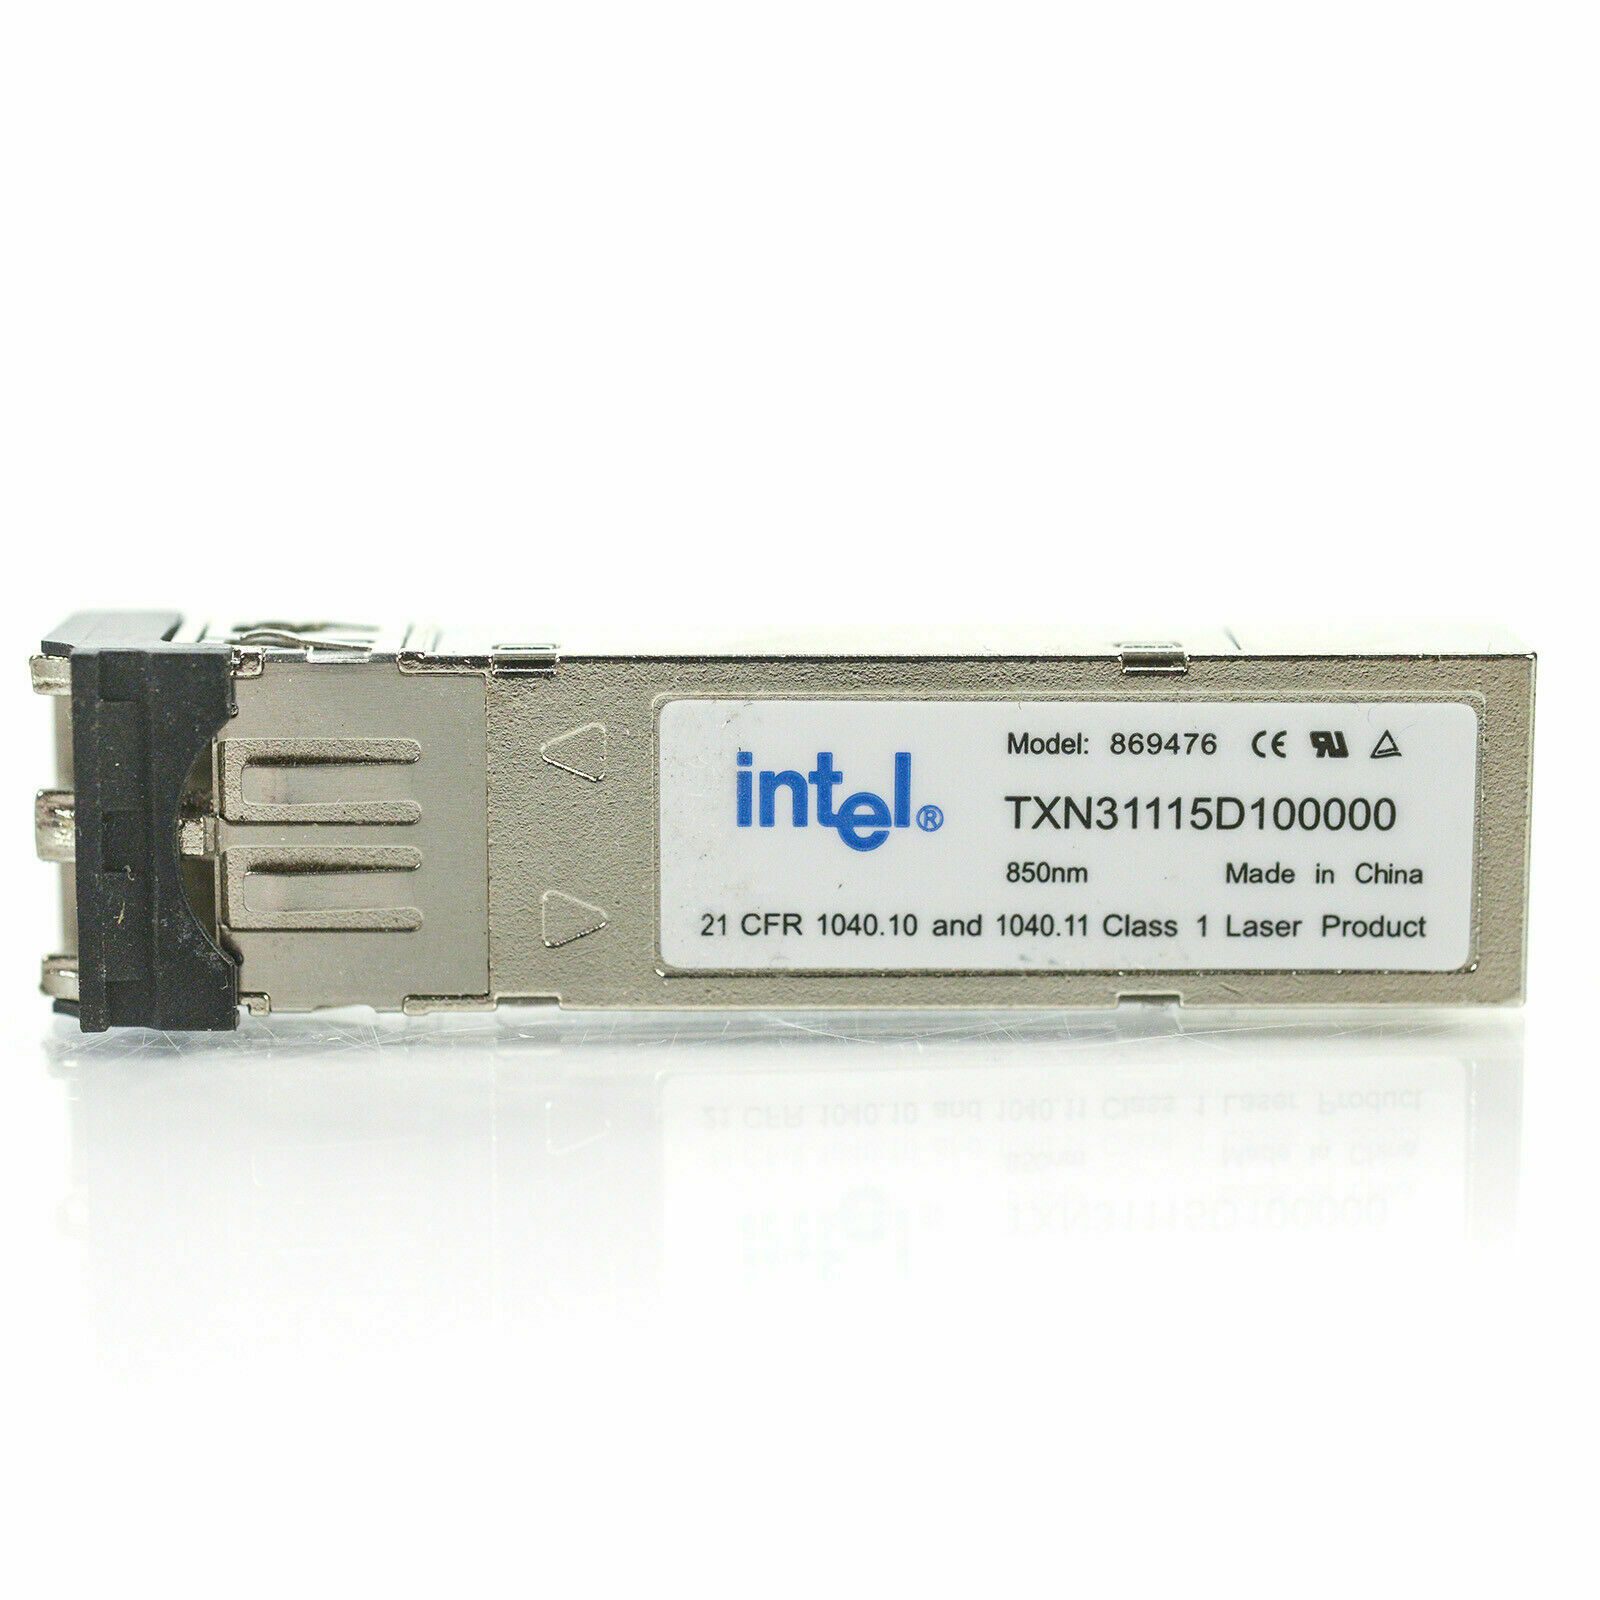 Intel 869476 TXN31115D100000 4GB 850nm SX SFP Short-Wave GBIC Transceiver Module